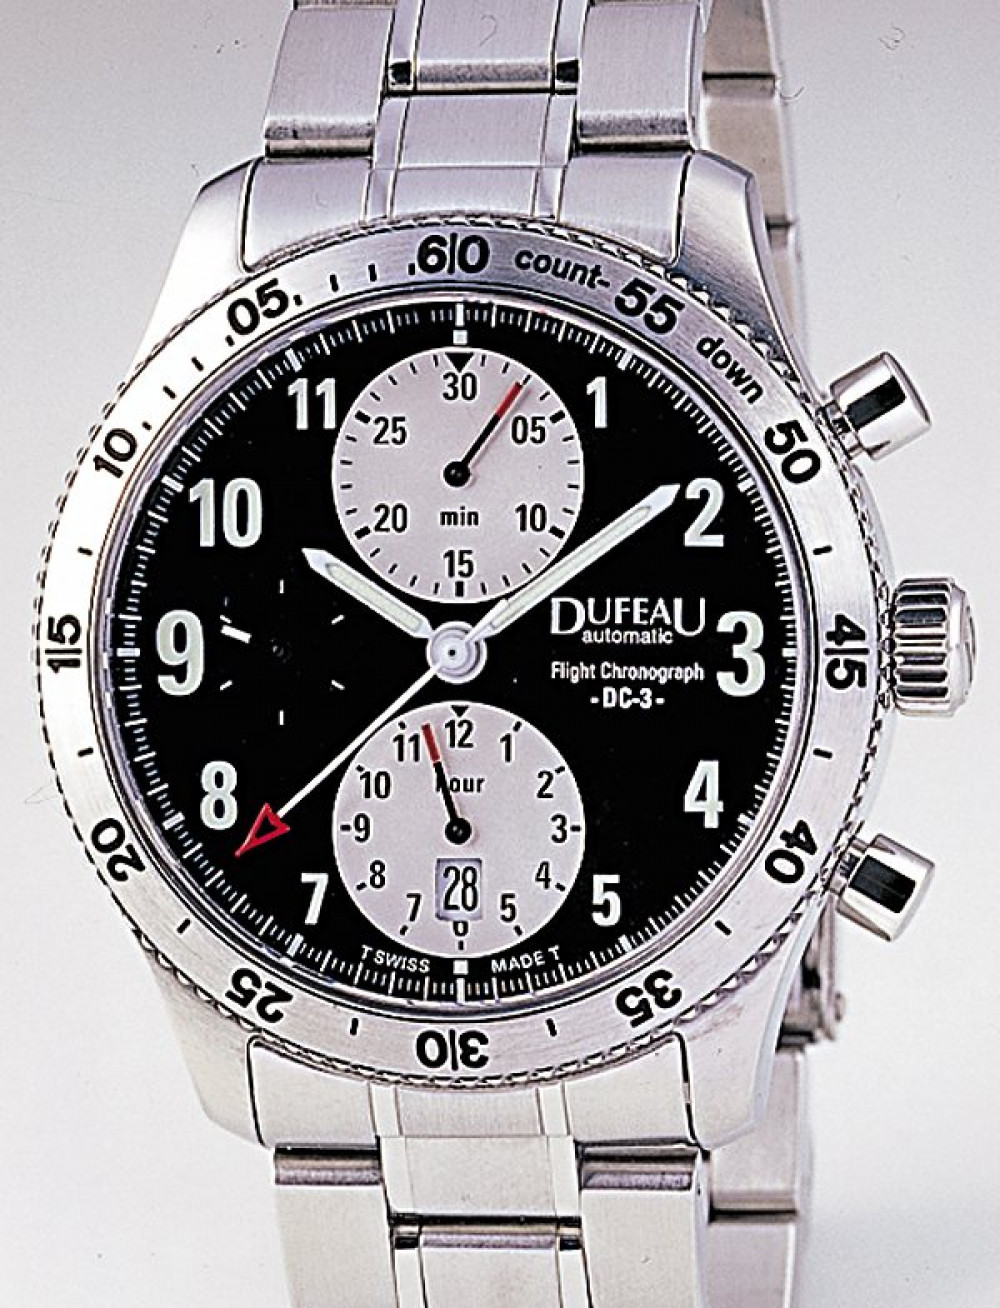 Zegarek firmy Dufeau, model Flight-Chronograph DC-3